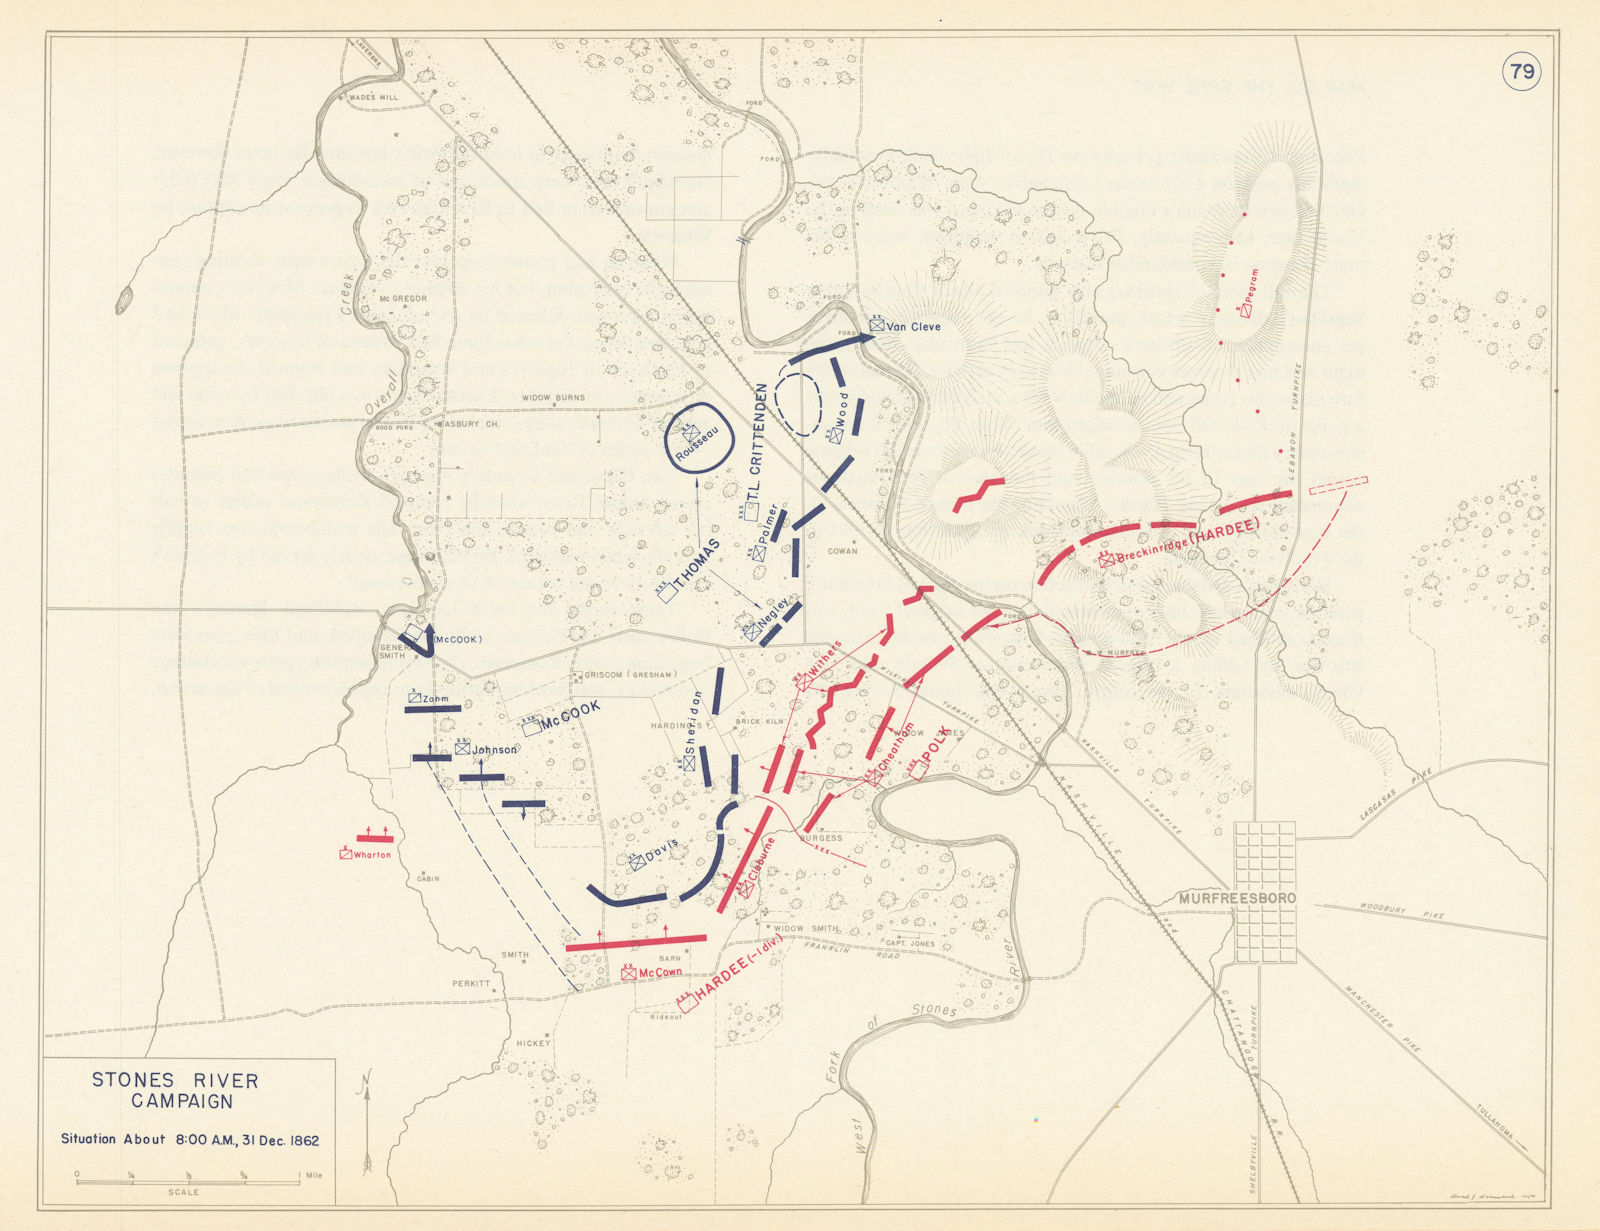 American Civil War. 8am 31 December 1862. Battle of Stones River 1959 old map